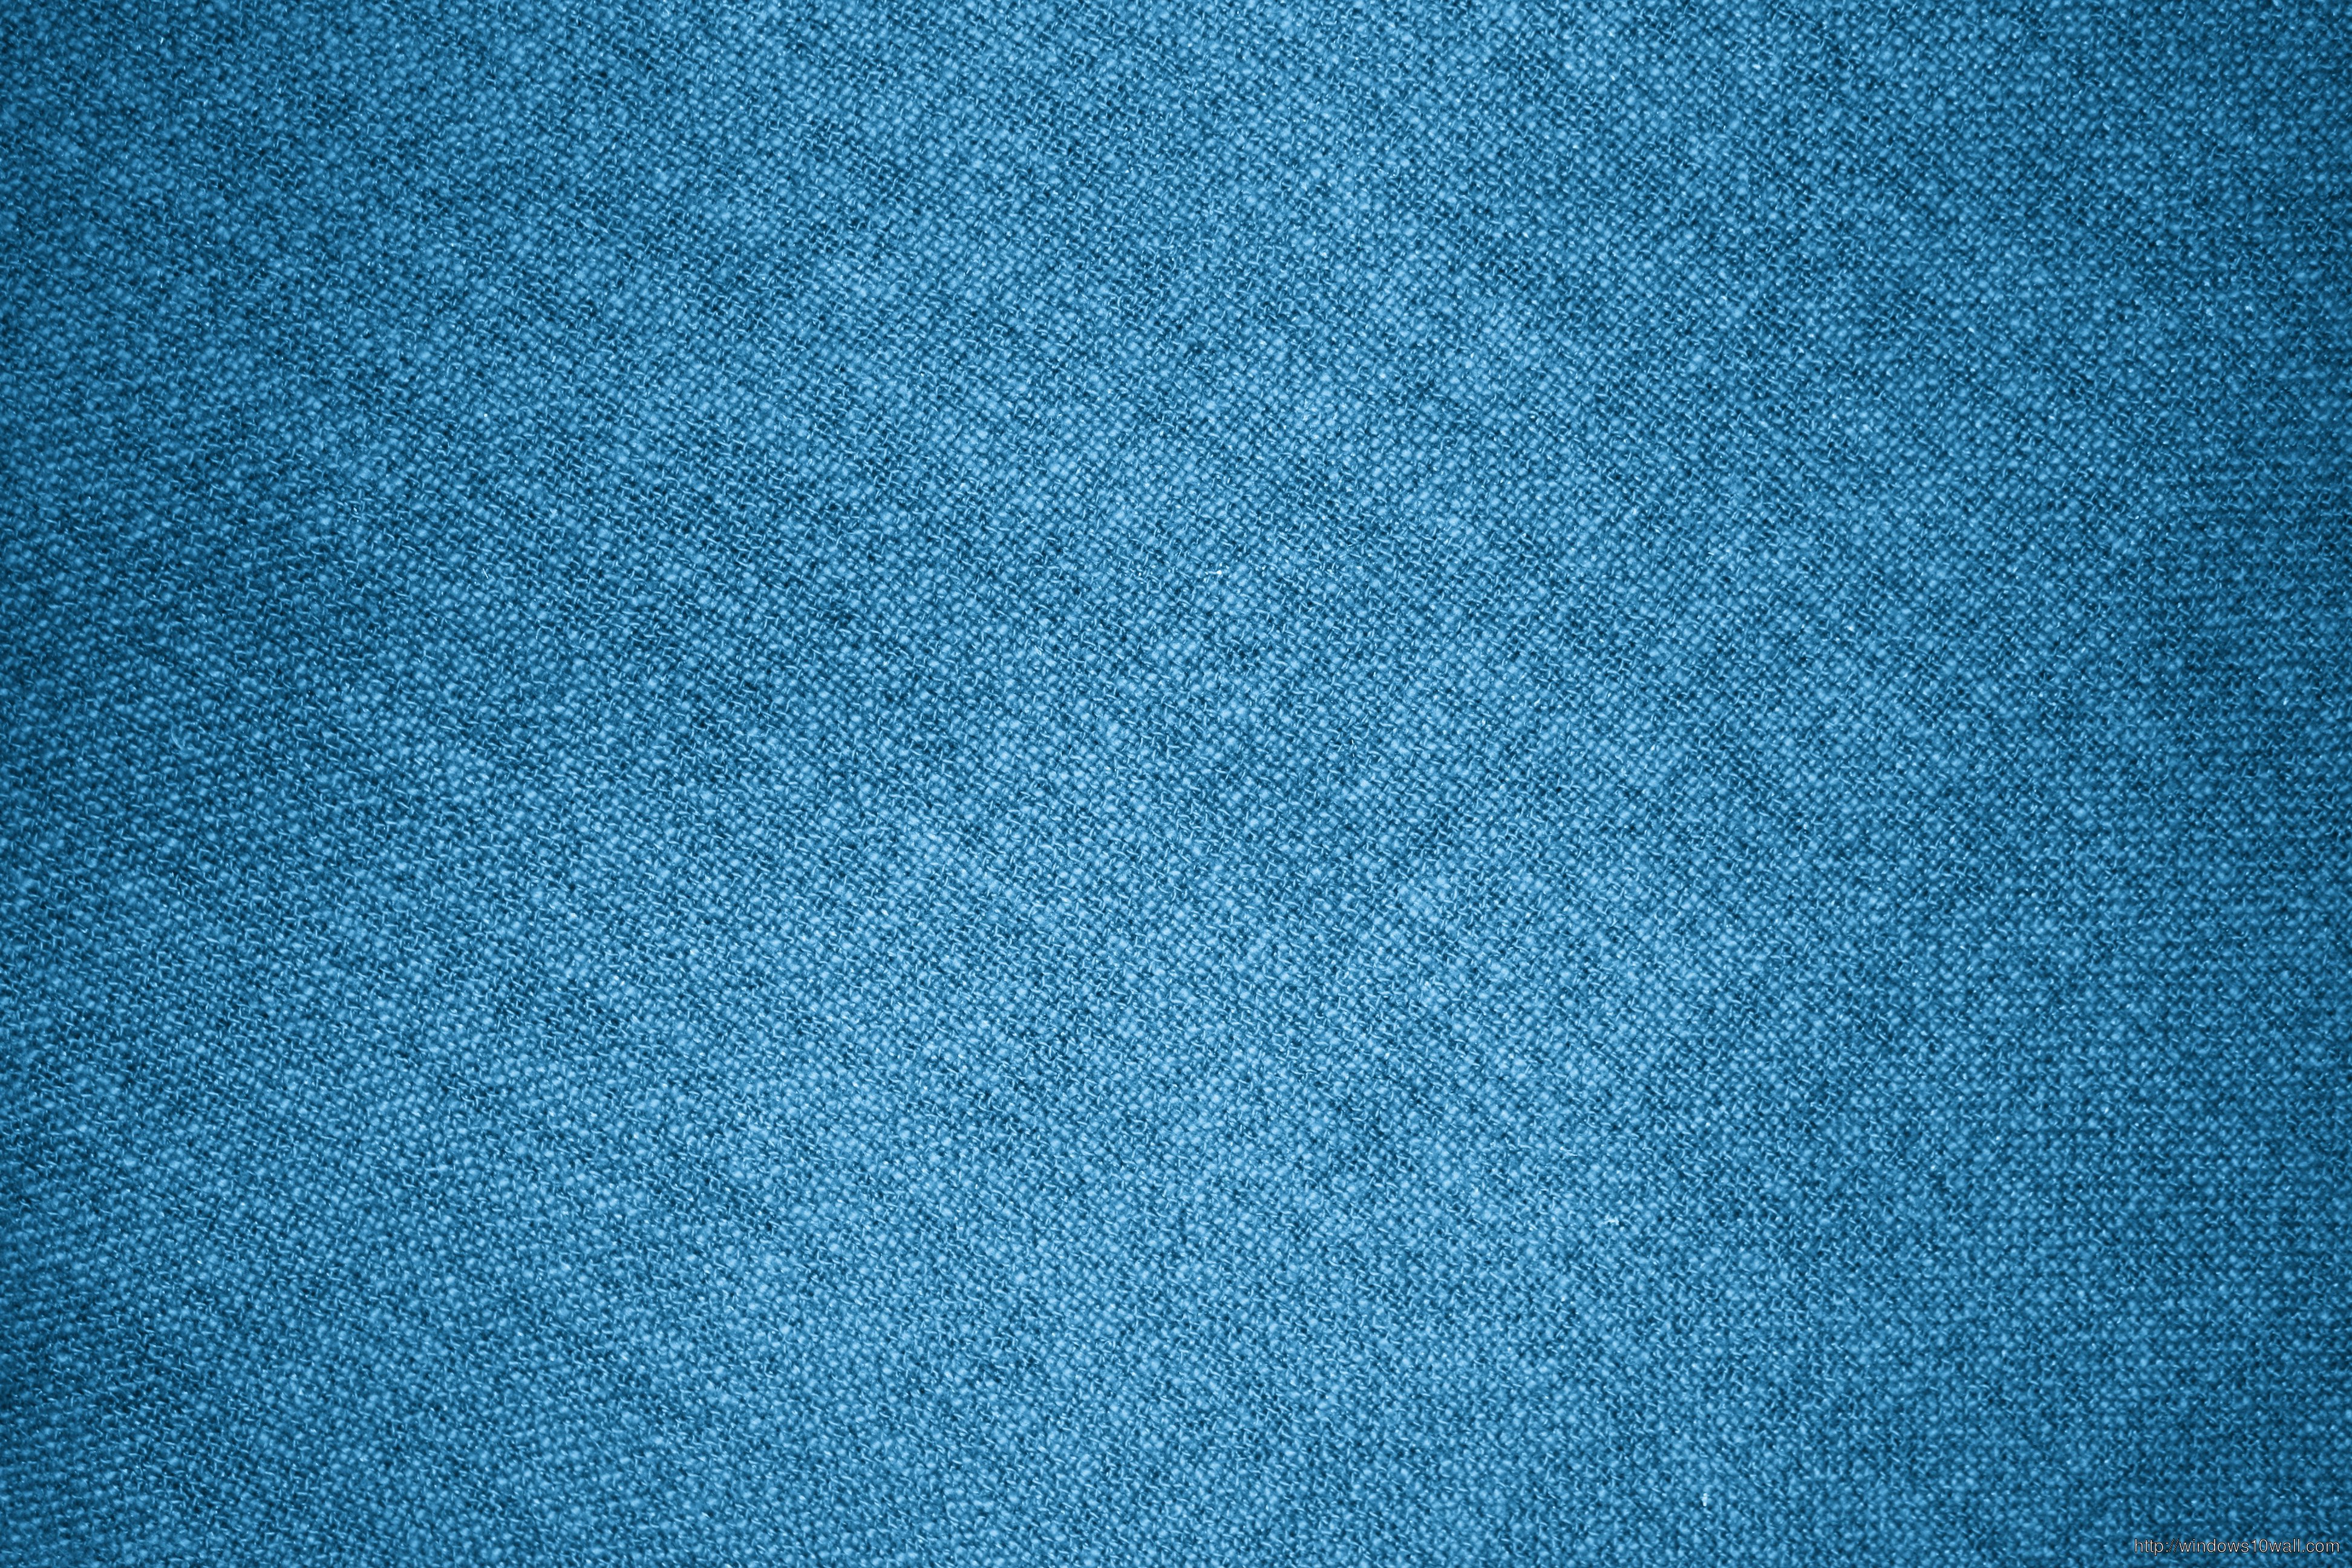 Azure Blue Fabric Background Wallpaper